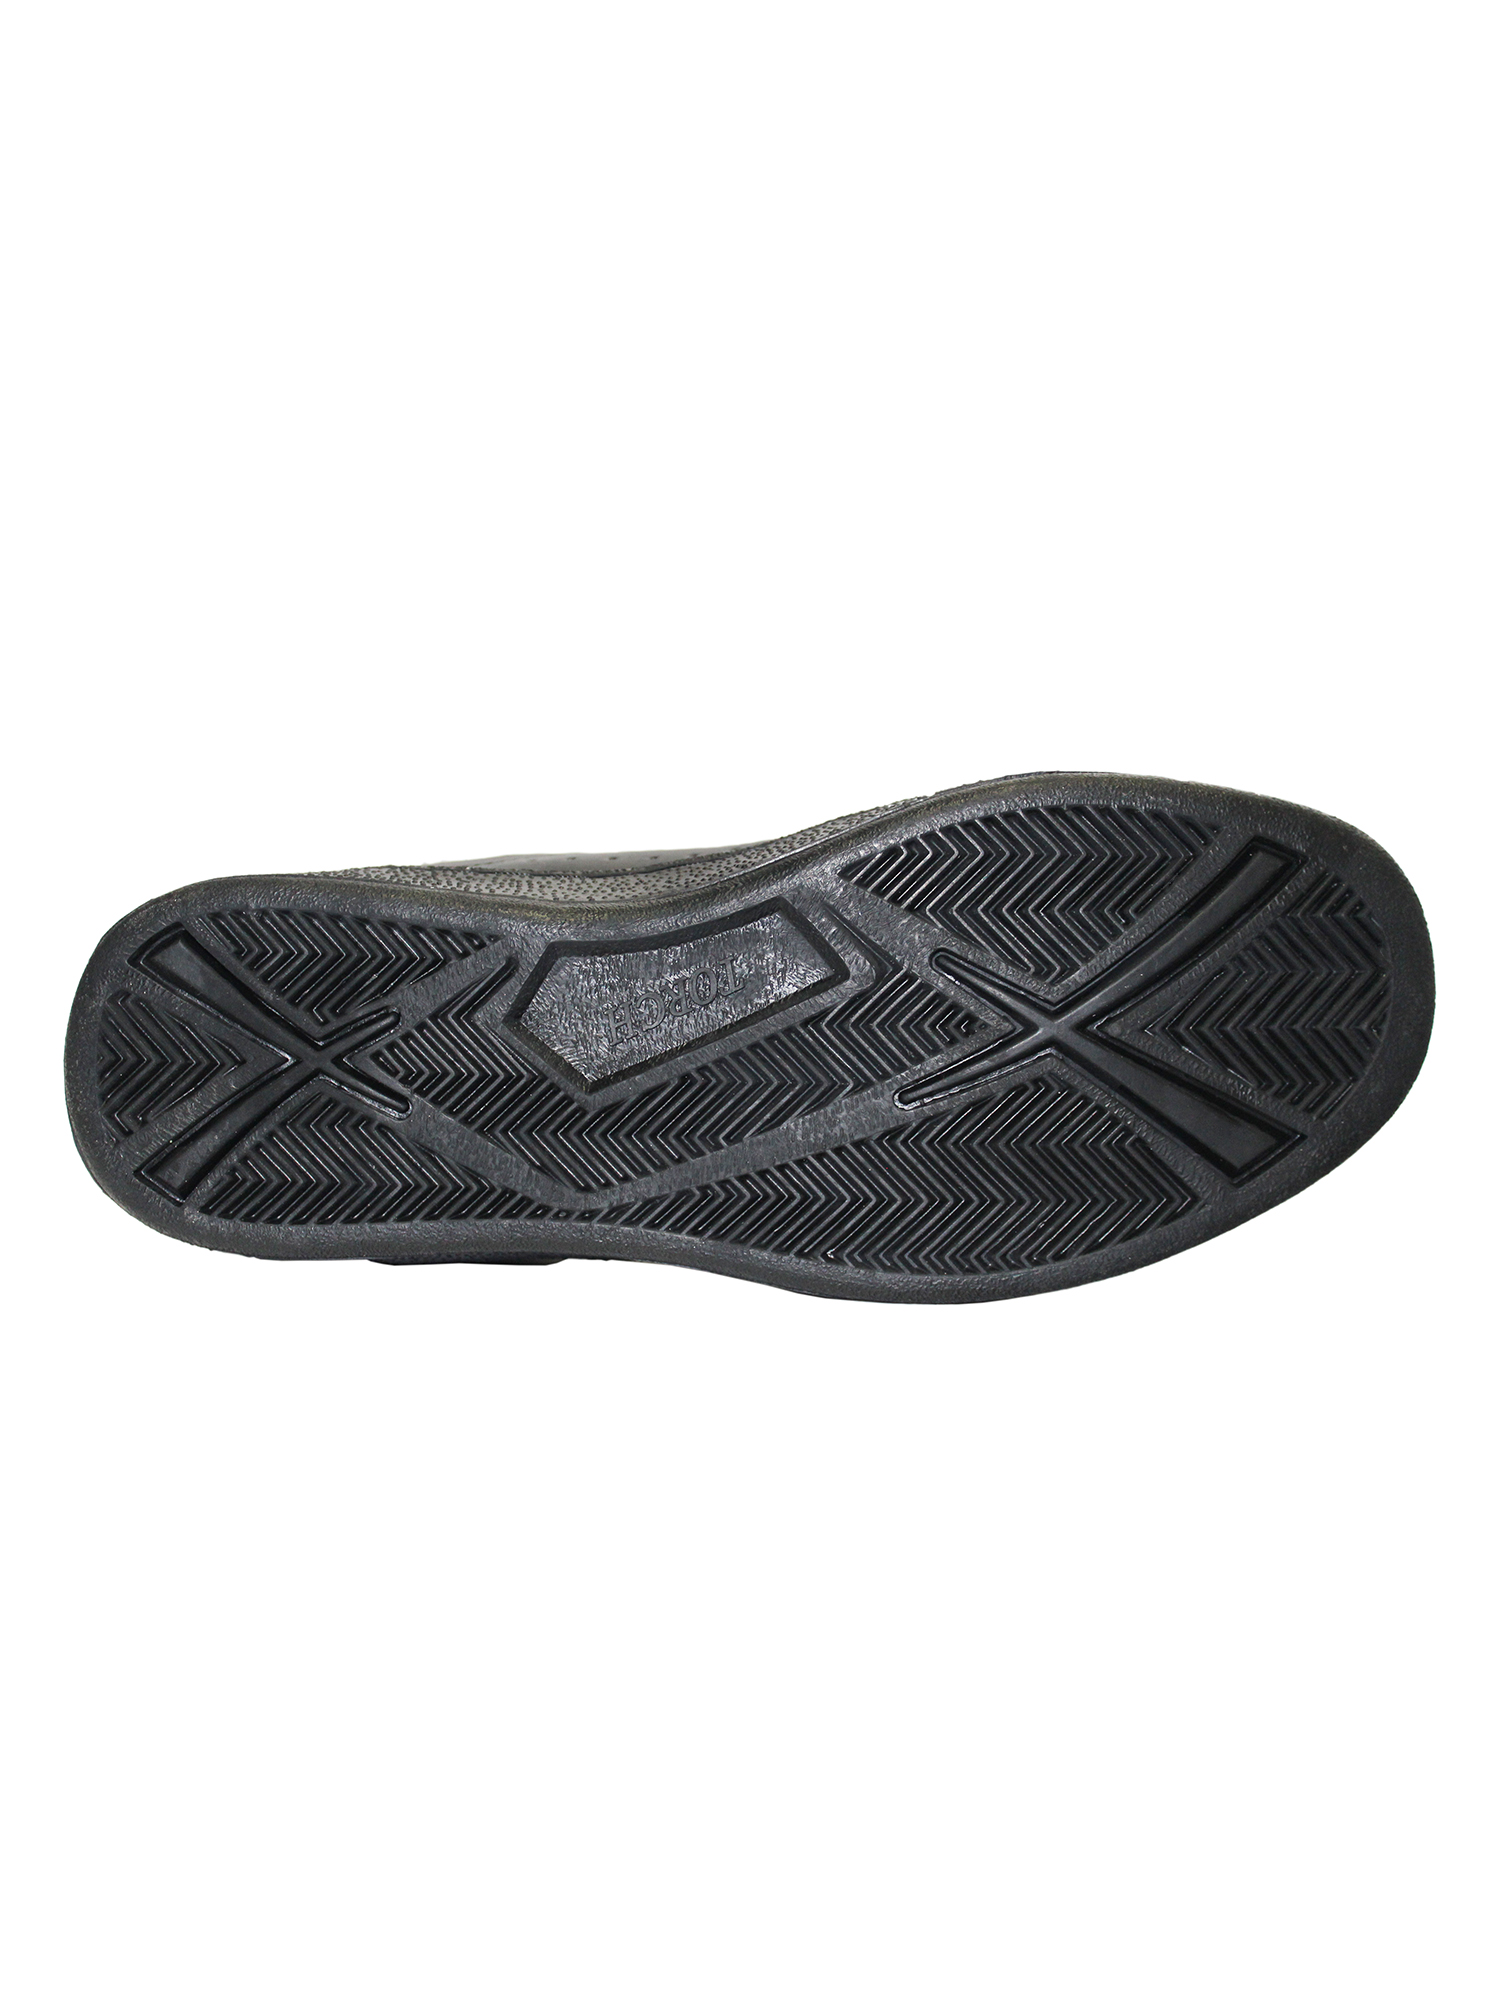 Tanleewa Men's Leather Strap Sneakers Lightweight Hook and Loop Walking Shoe Size 11.5 Adult Male - image 3 of 4